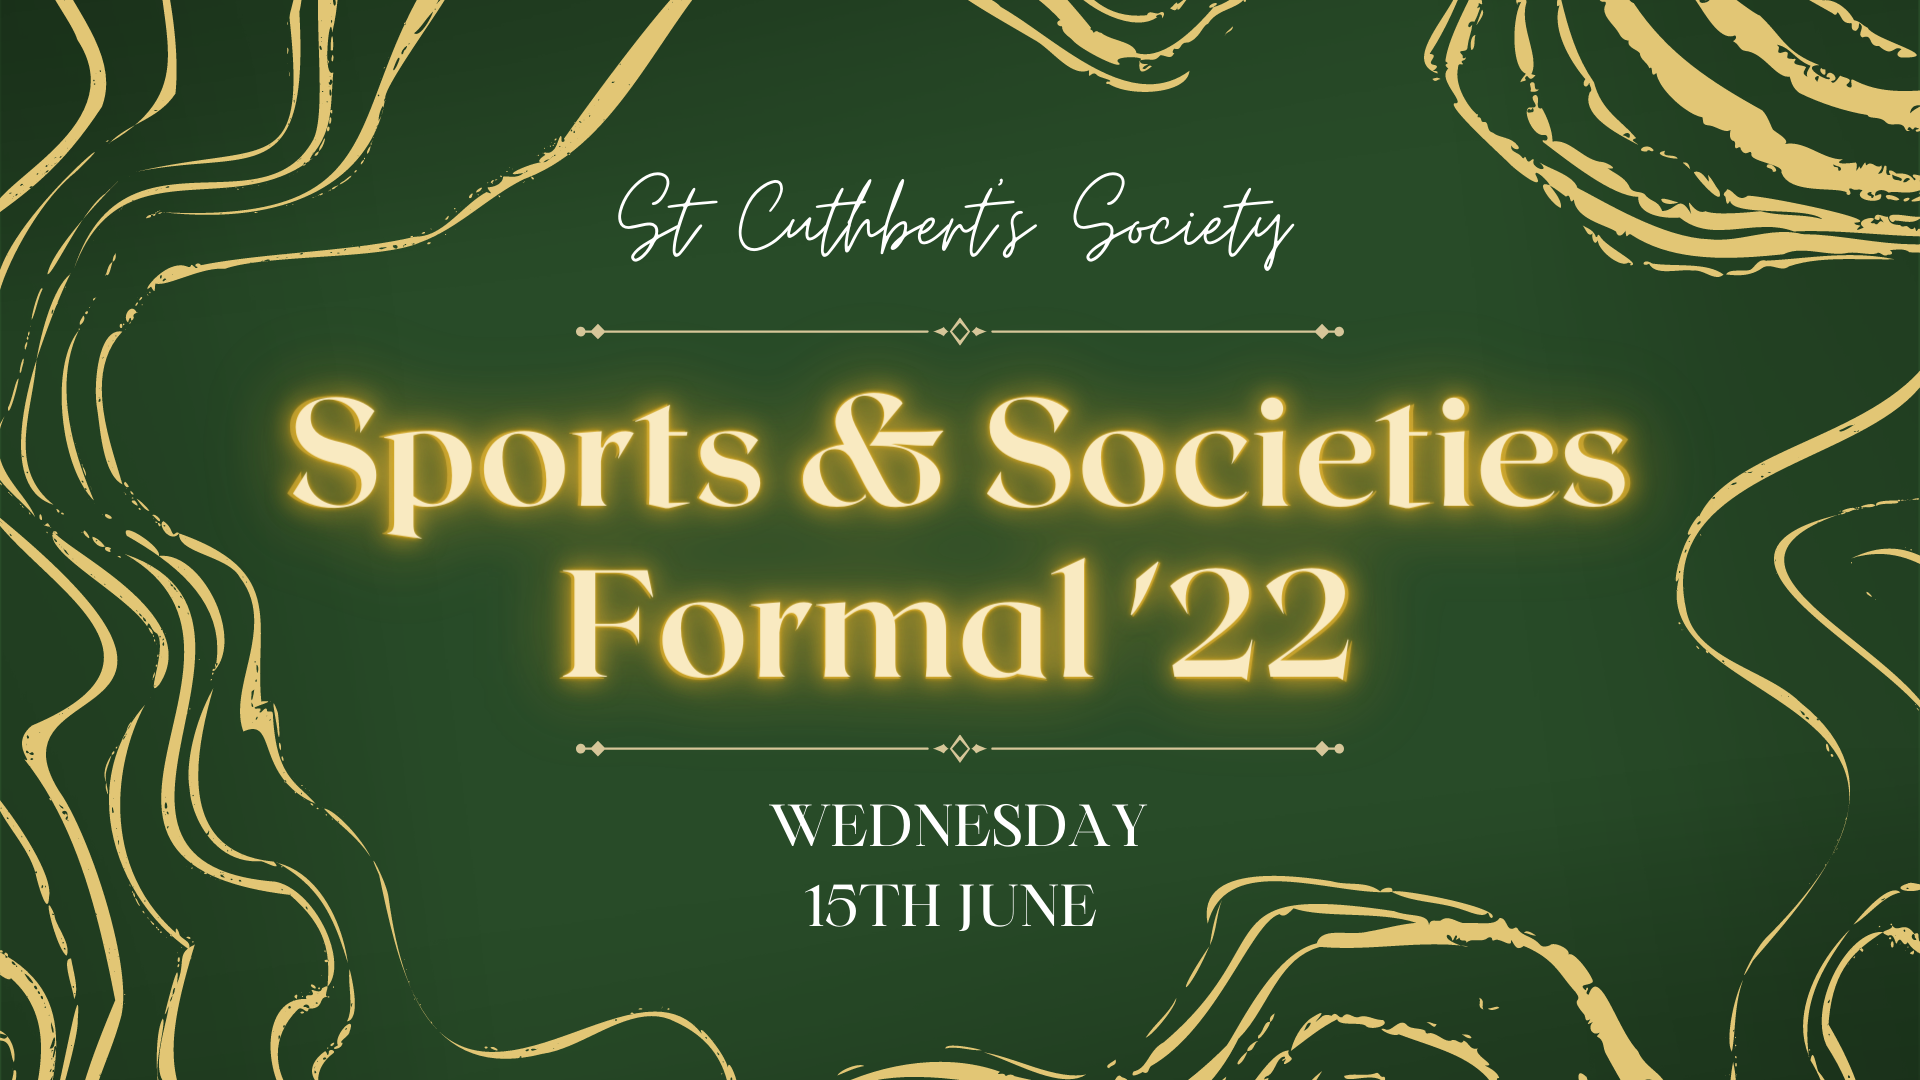 St Cuthbert's - Sports & Societies Formal